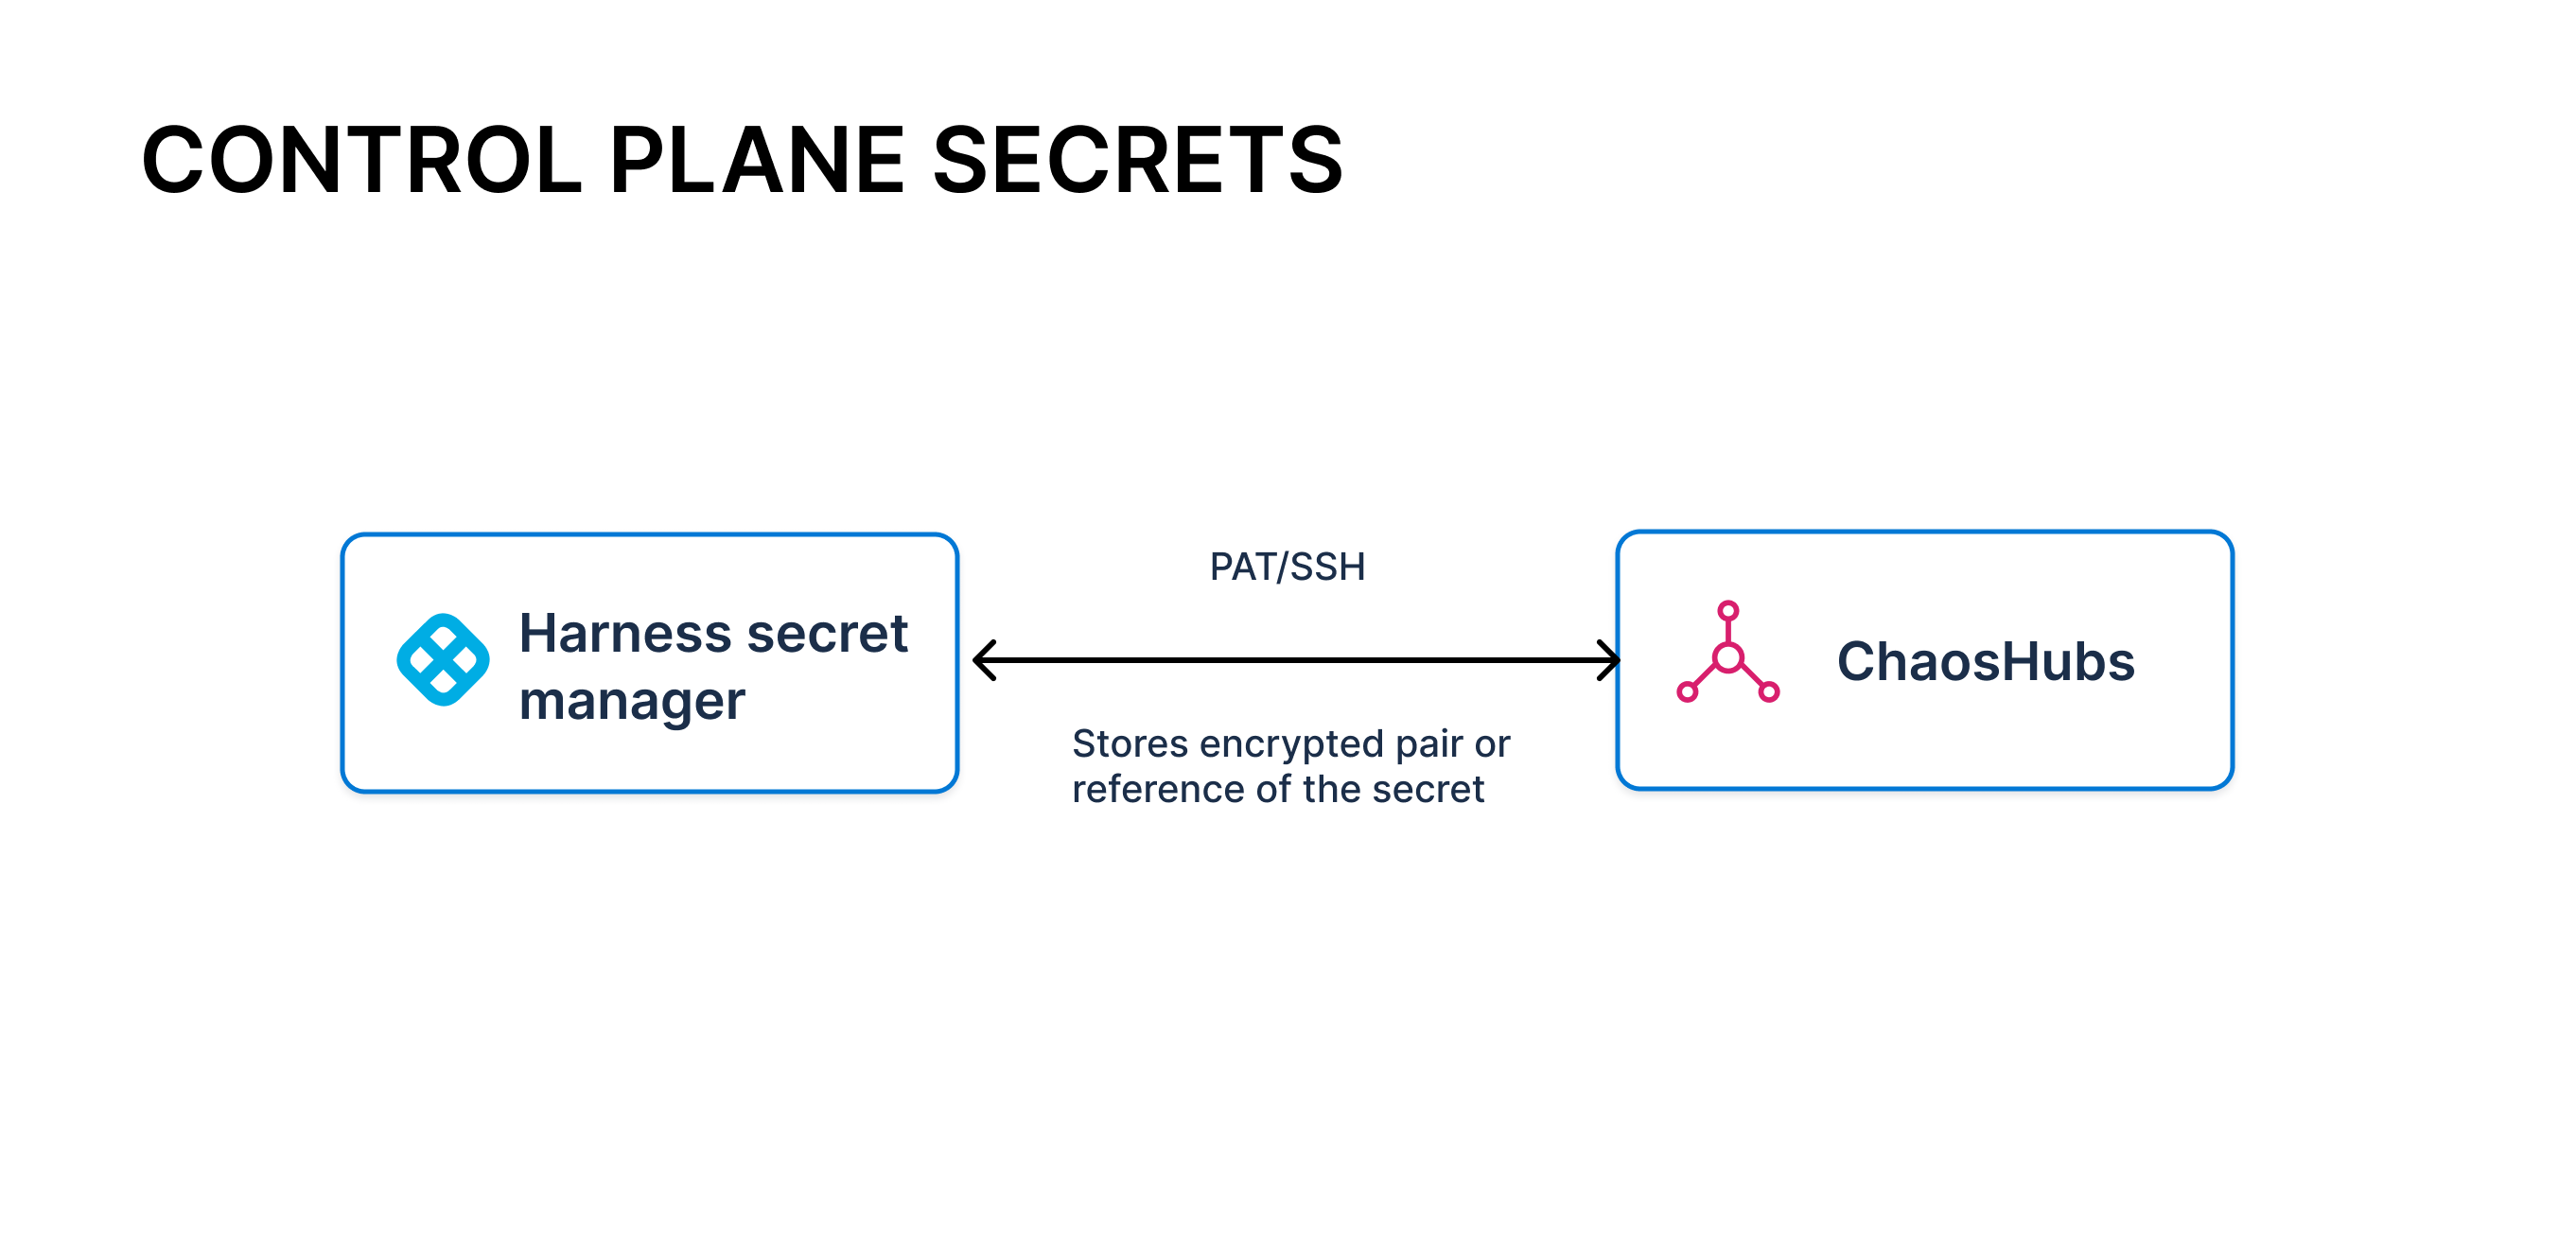 Control plane secrets